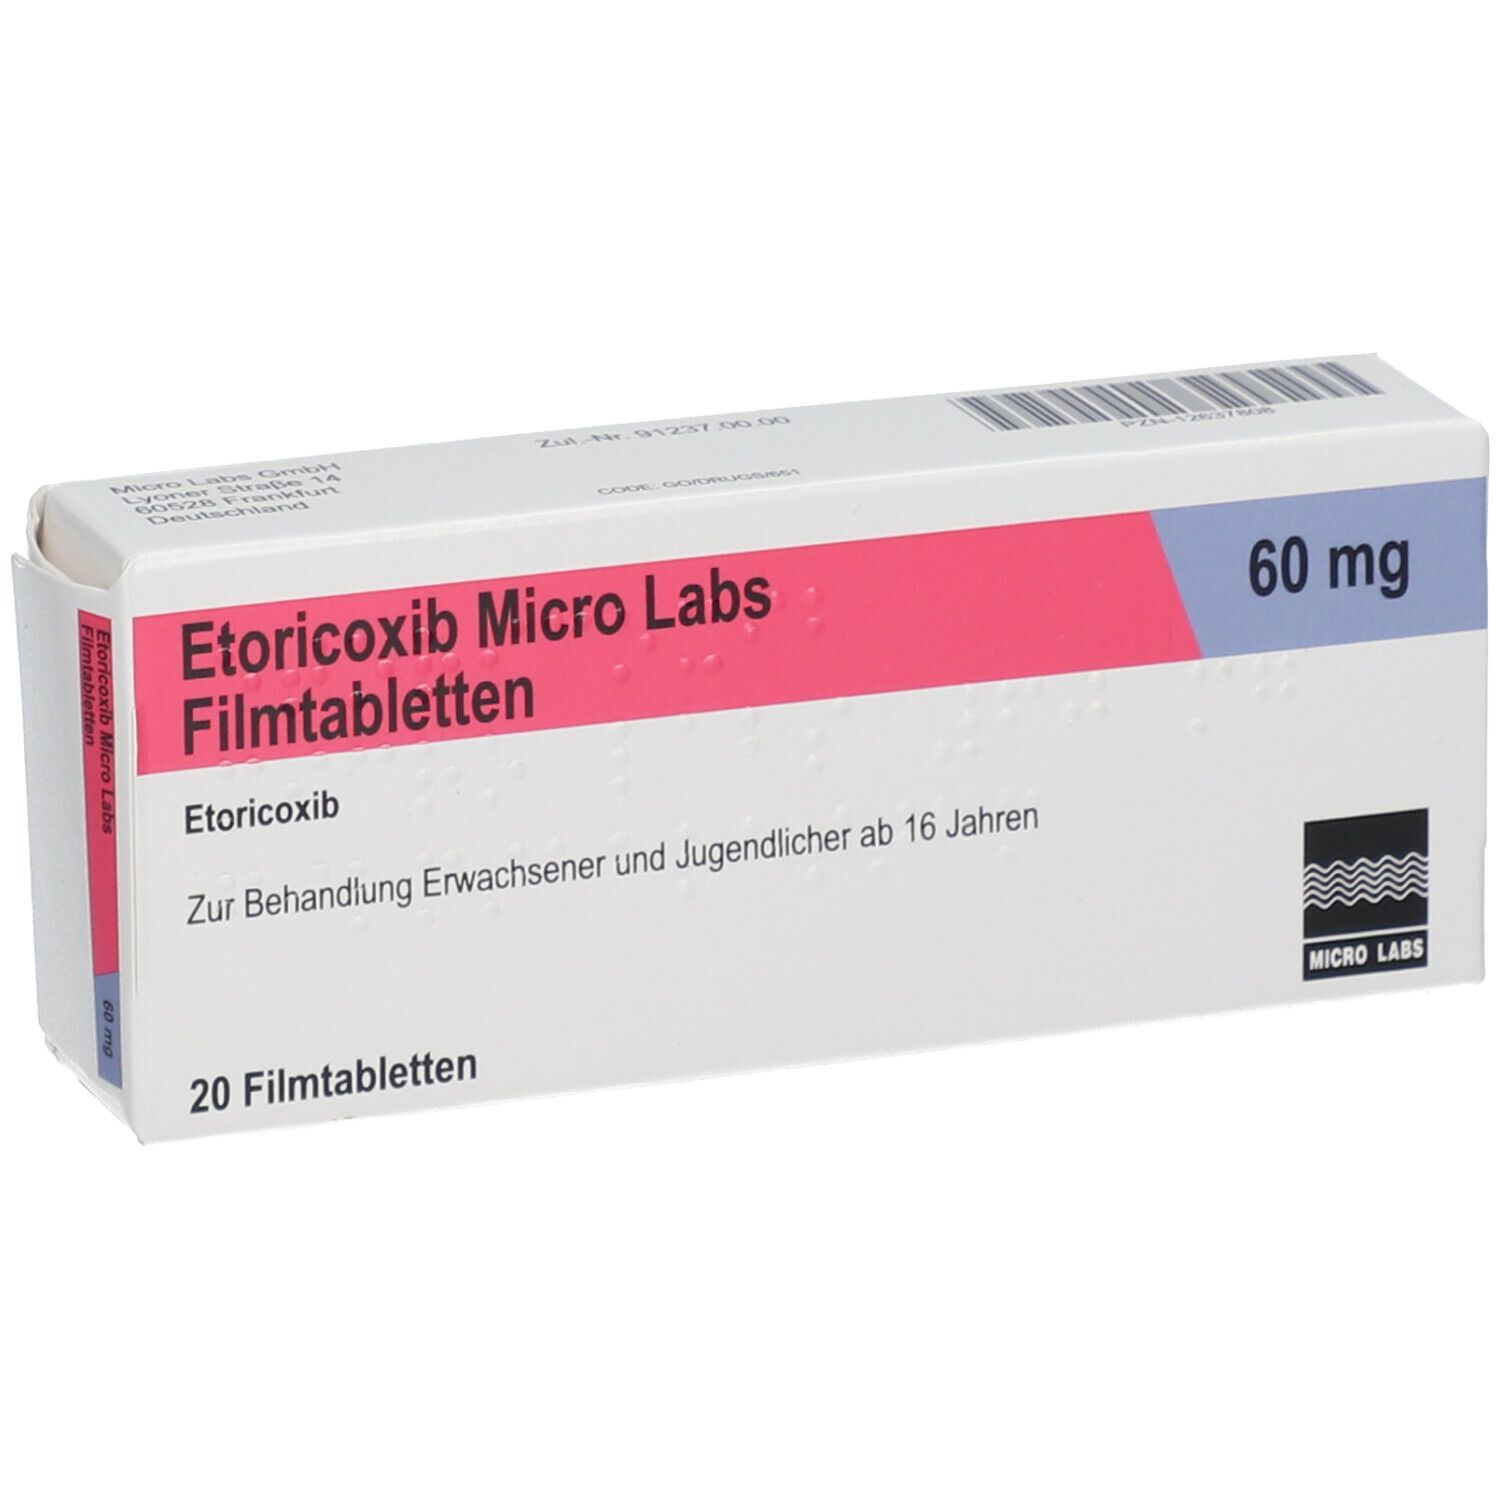 Etoricoxib Mirco Labs 60 mg